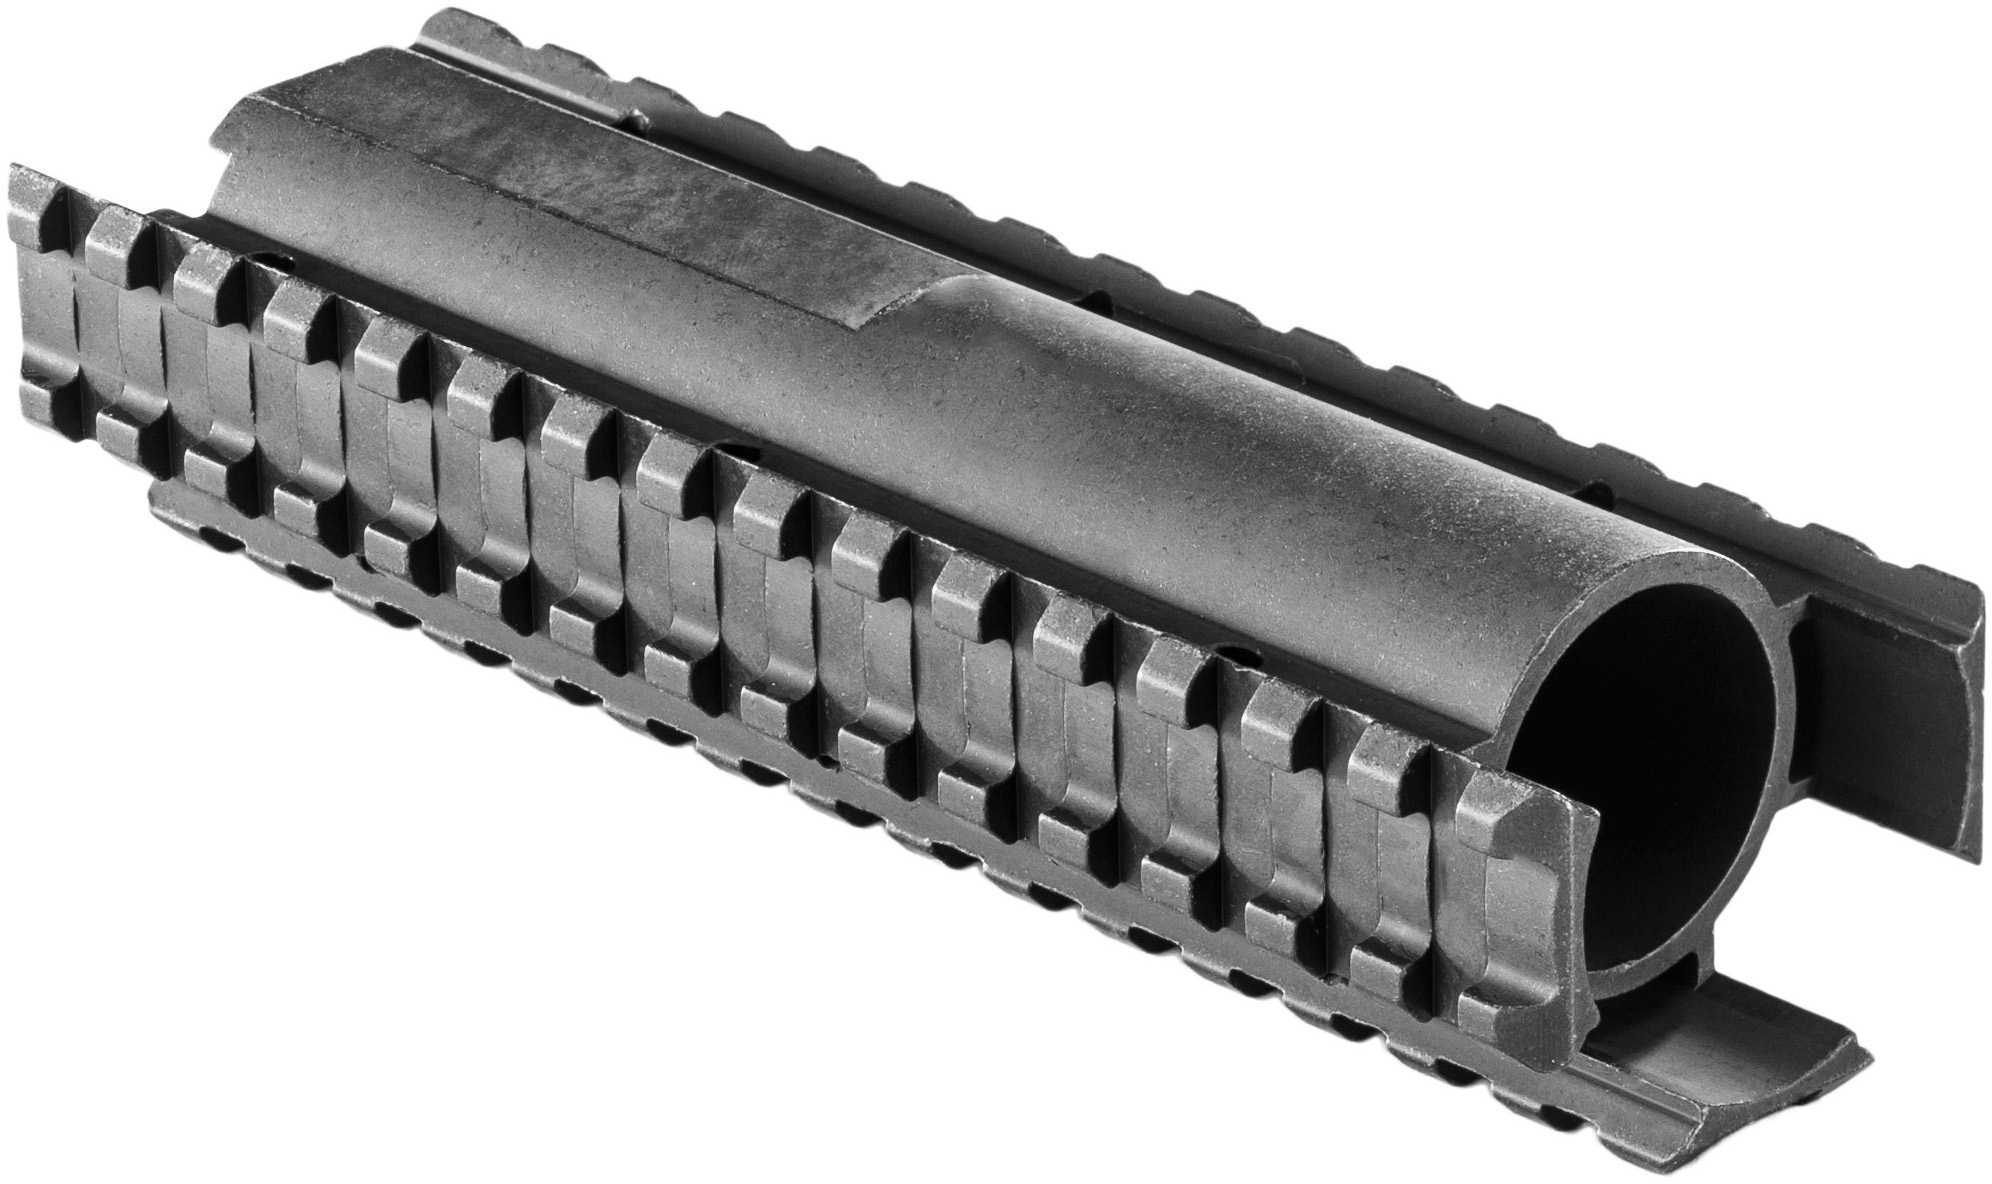 Ergo 4870 Tri Rail Forend Remington 870 Shotgun Aluminum Black